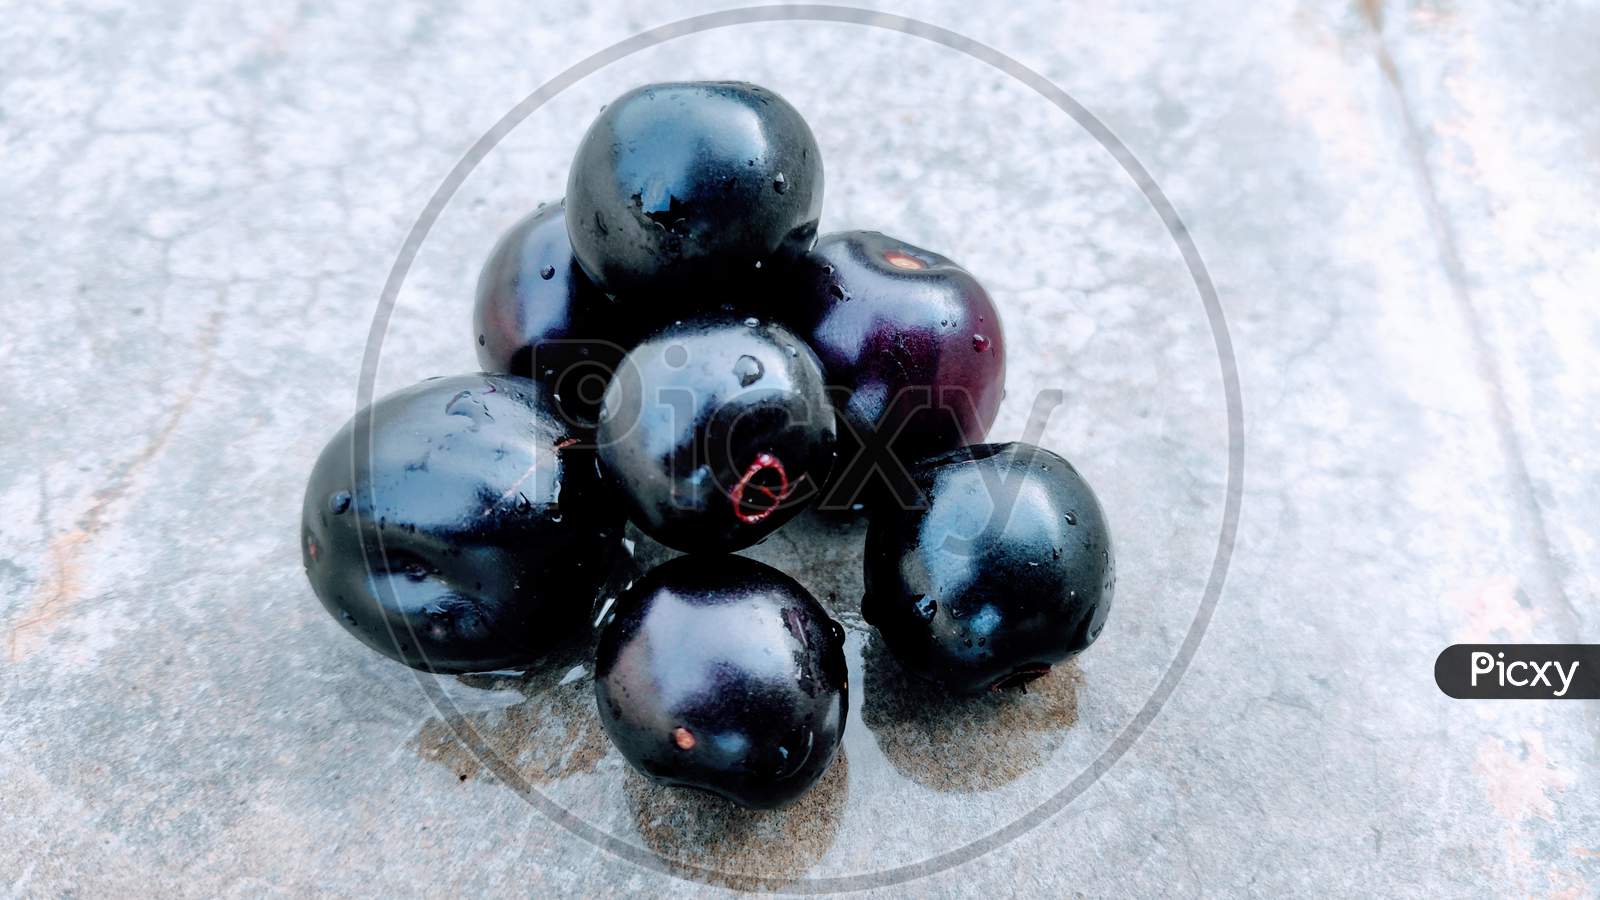 Fresh jamun fruits or Indian BlackBerry fruits on floor